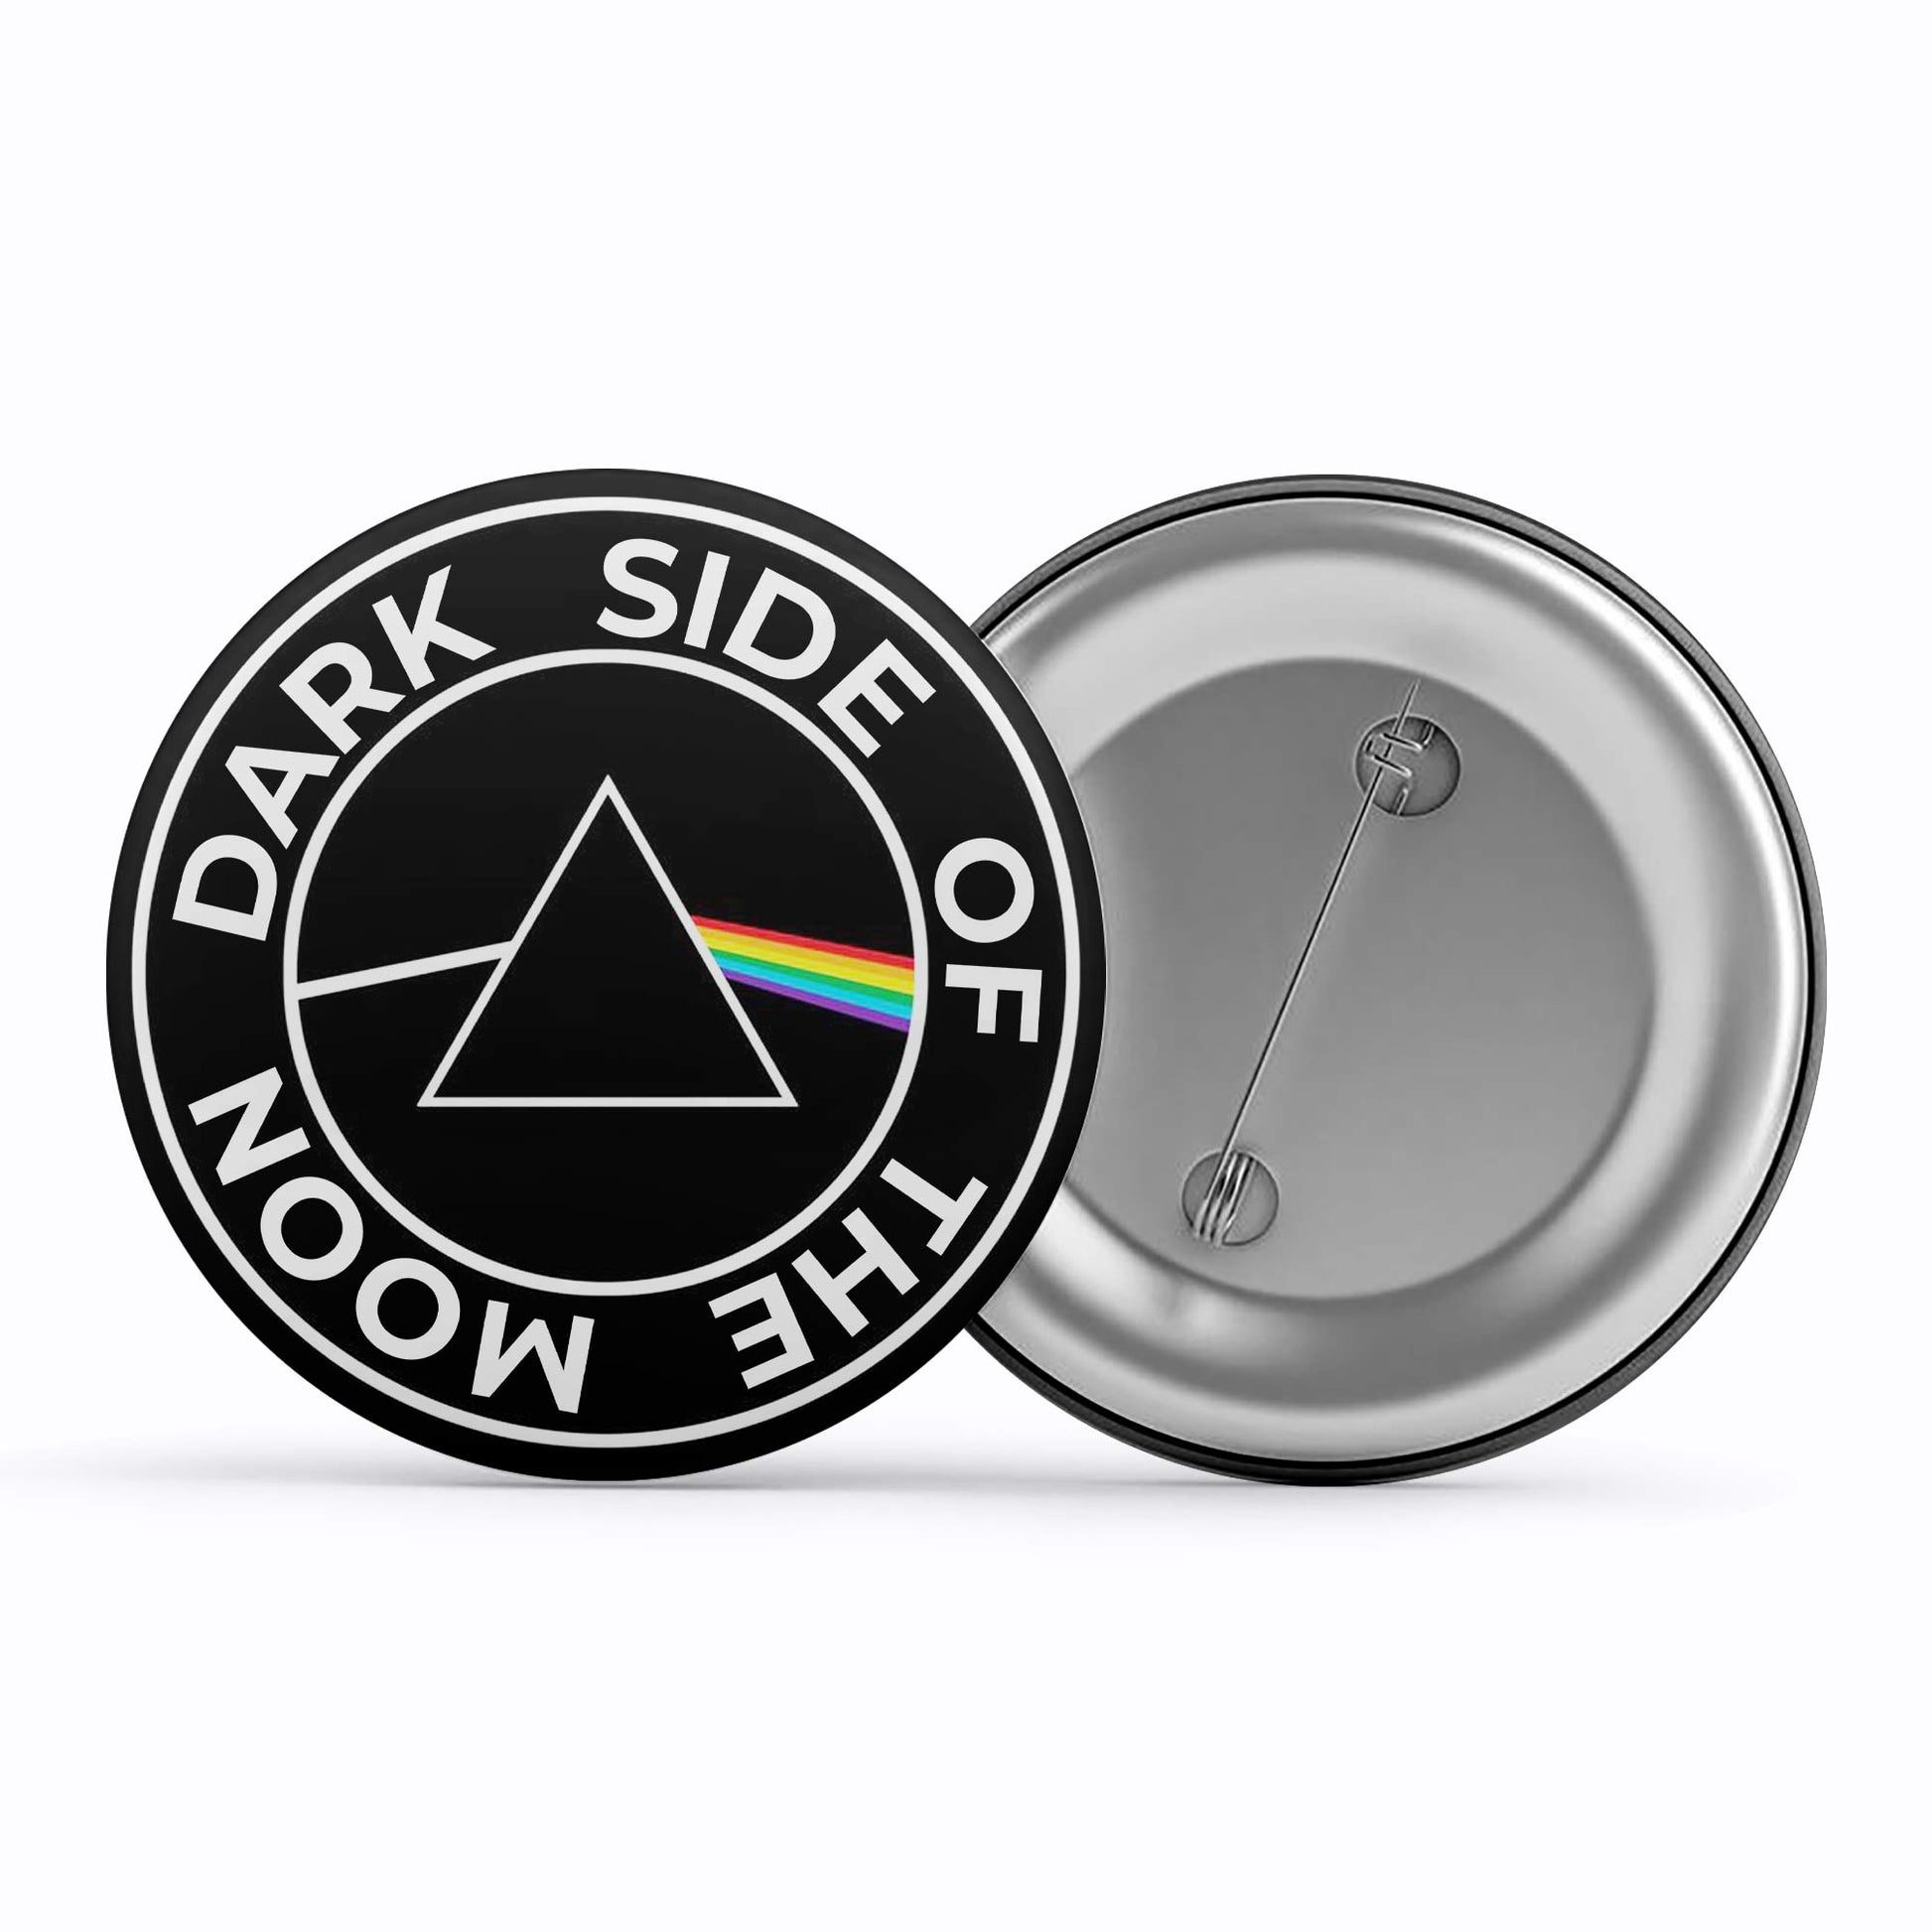 Dark Side Of The Moon Pink Floyd Badge Metal Pin Button Brooch The Banyan Tee TBT